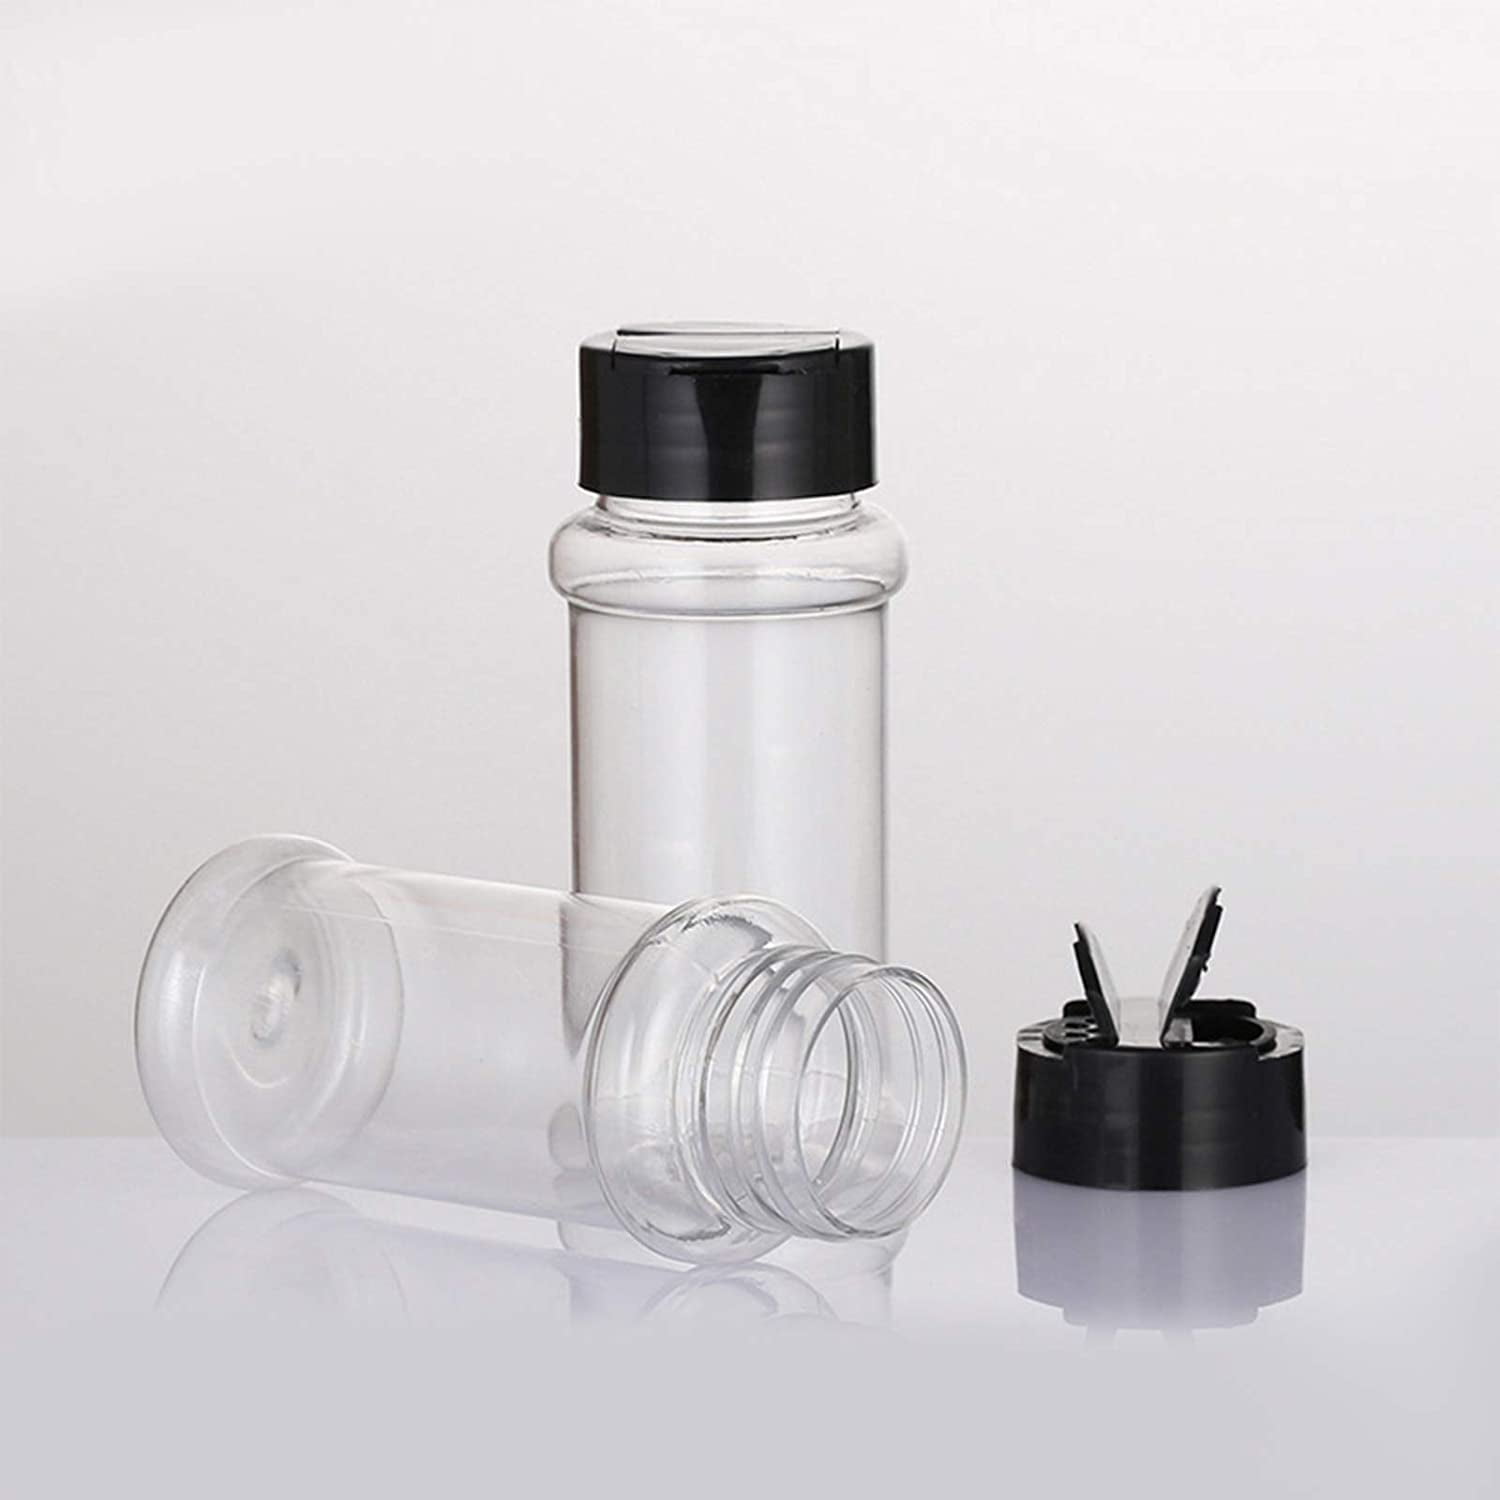 Tianifa 6pcs Black Spice Jars, 3 oz Glass Seasoning Bottles